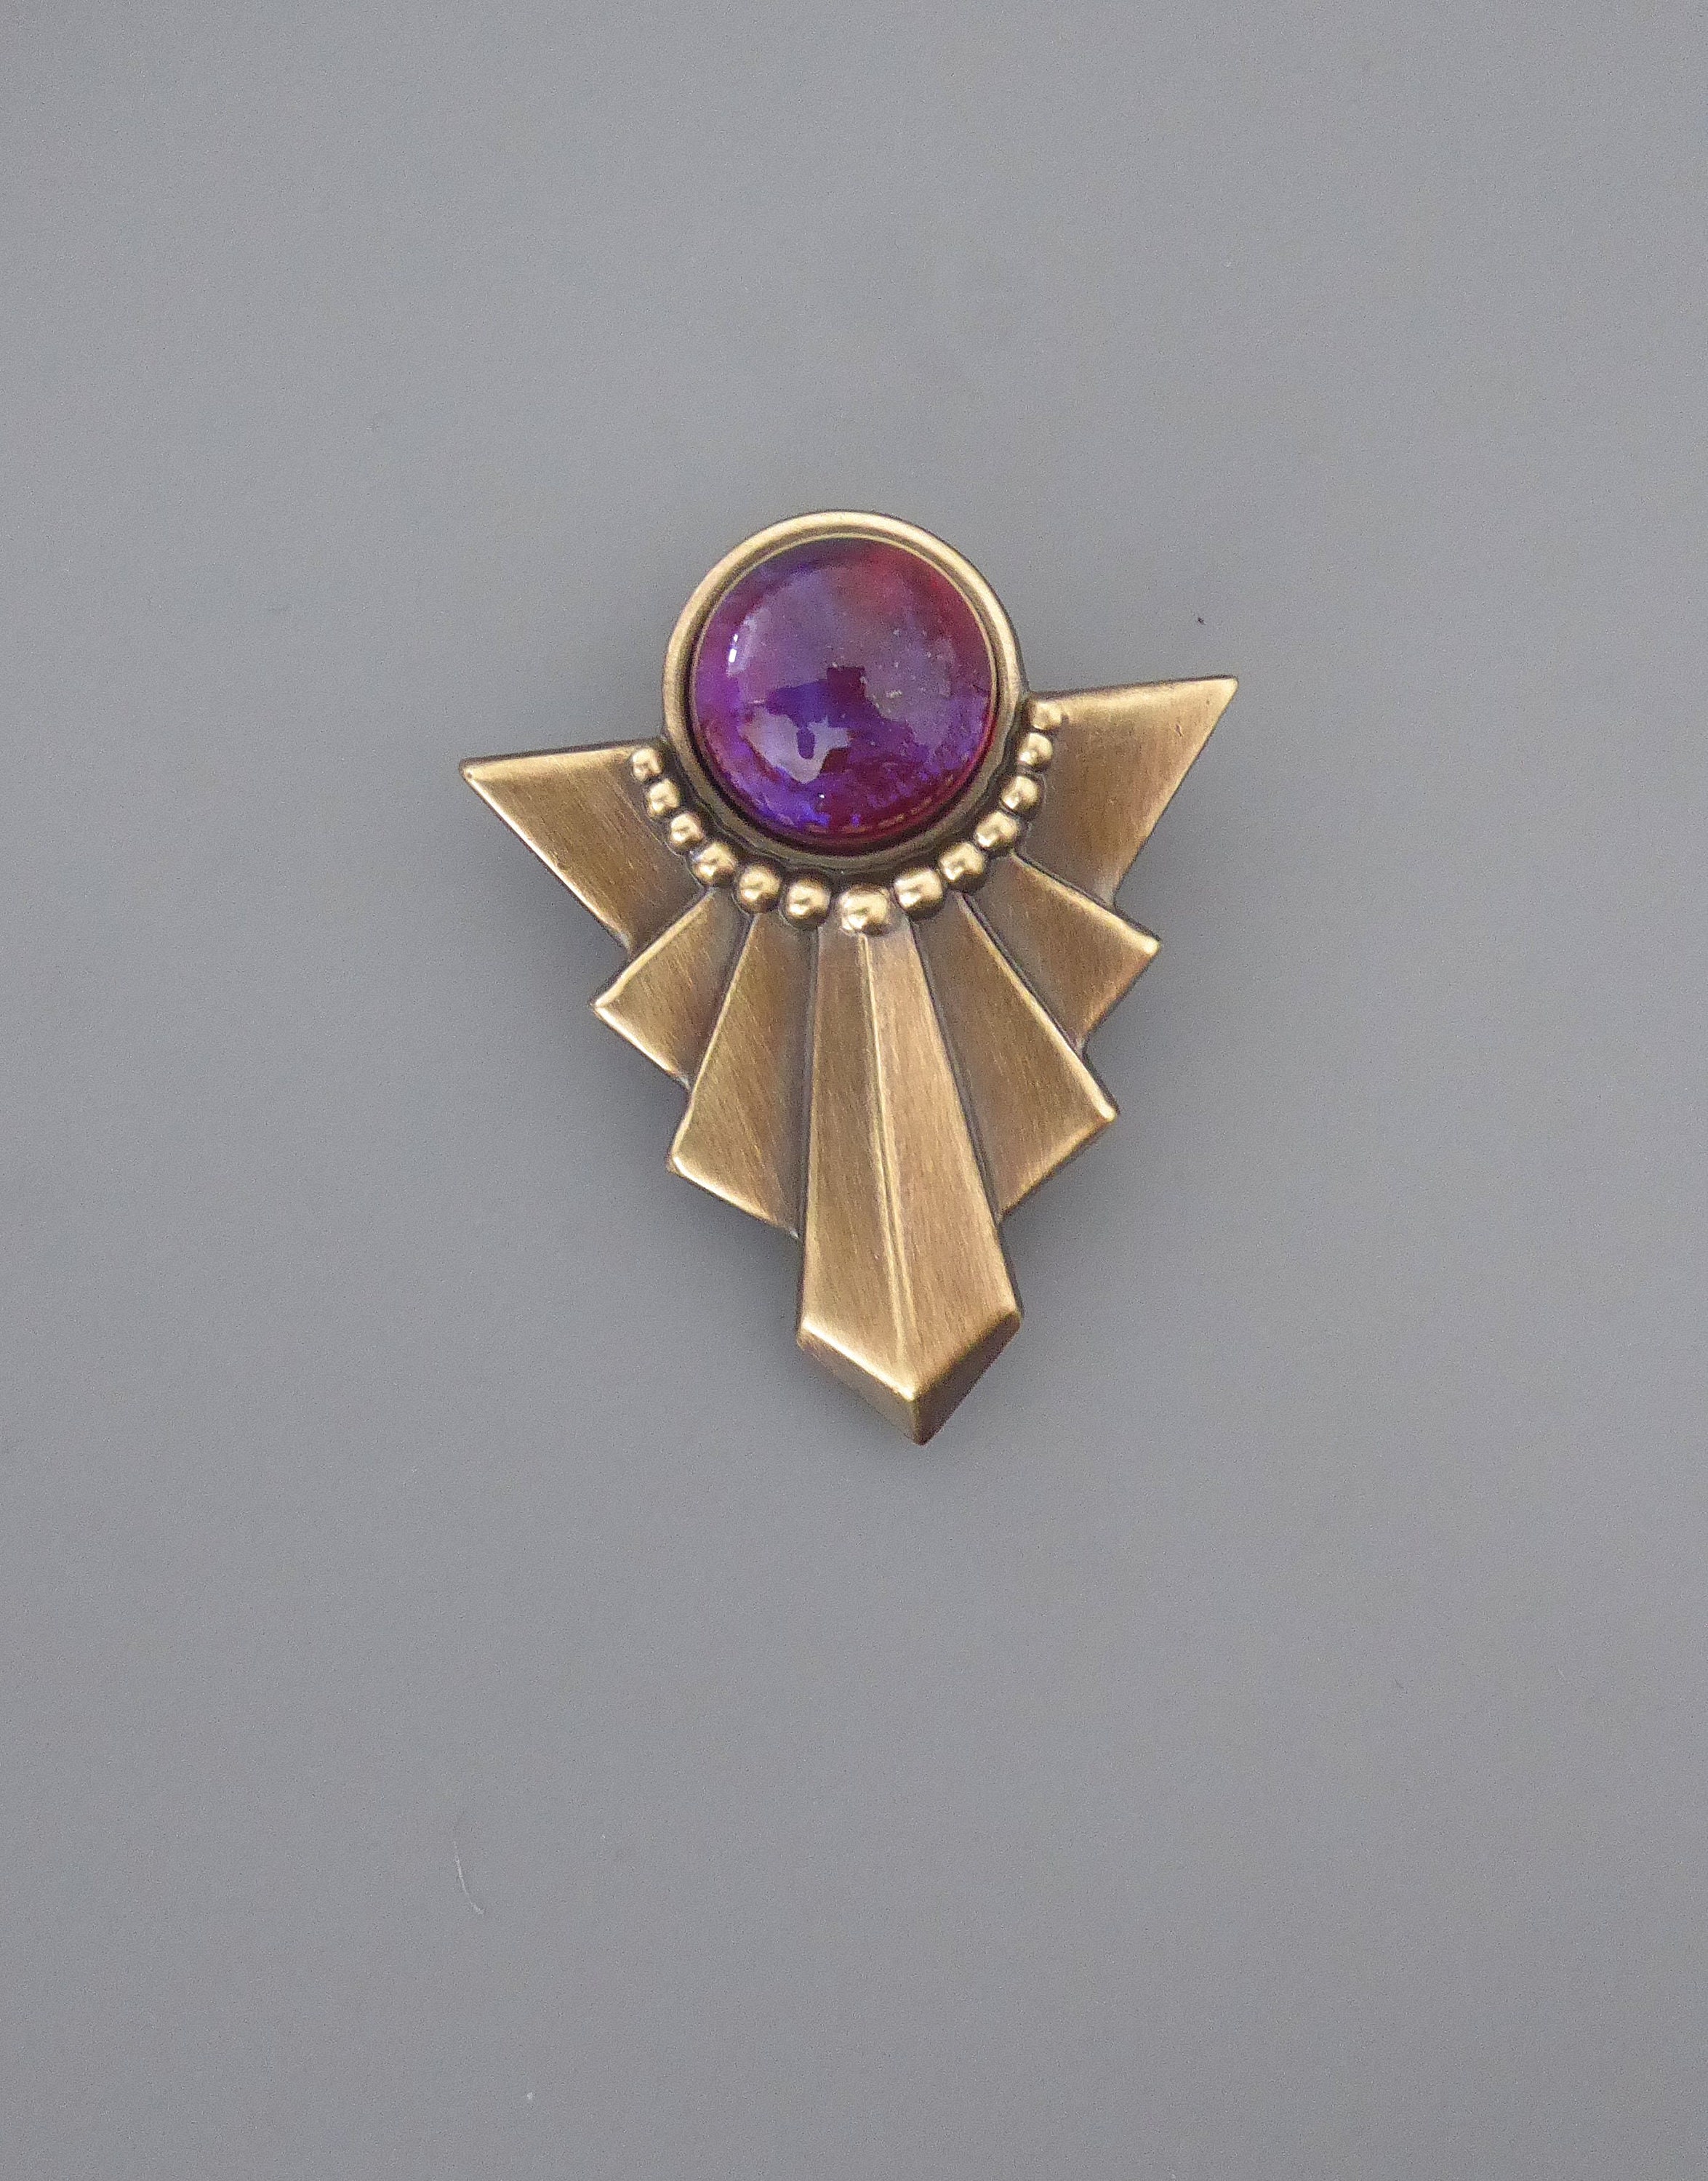 Art Deco Jewelry Vintage Inspired Art Deco Pin Art Nouveau Jewelry Art Deco Crystal Brooch 1920\u2019s Jewelry Woman\u2019s Brooch